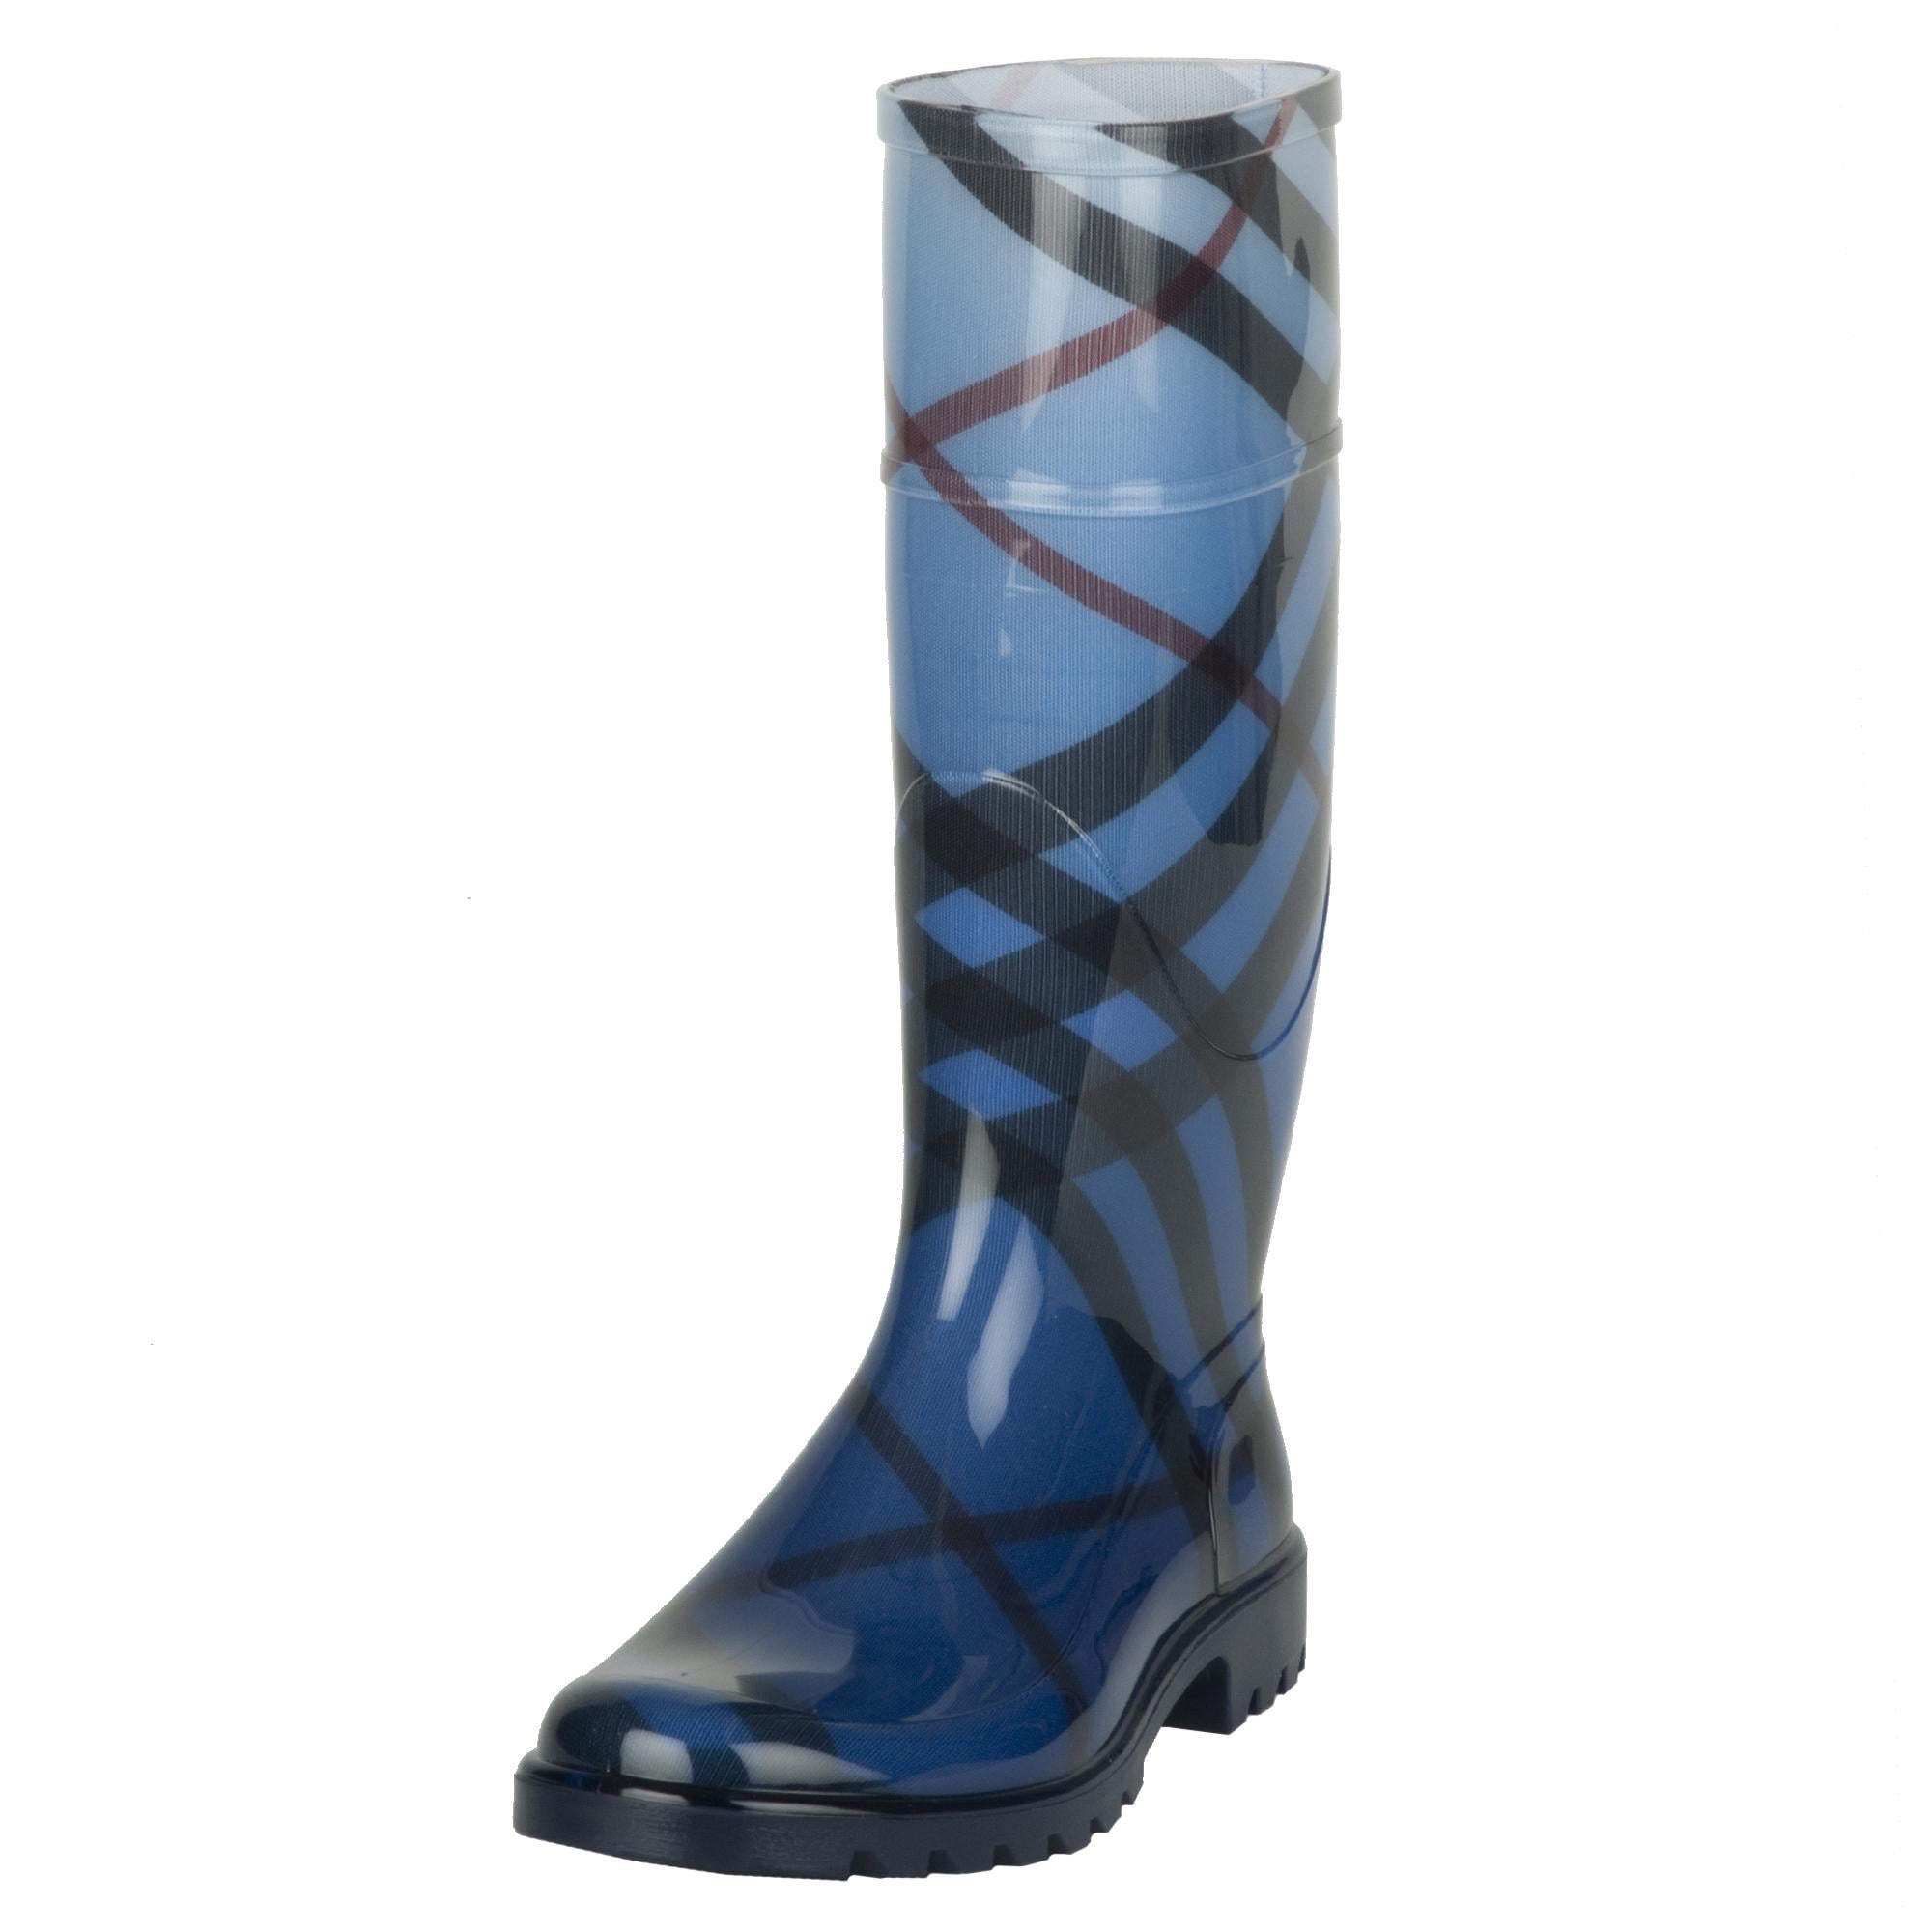 burberry rain boots womens blue